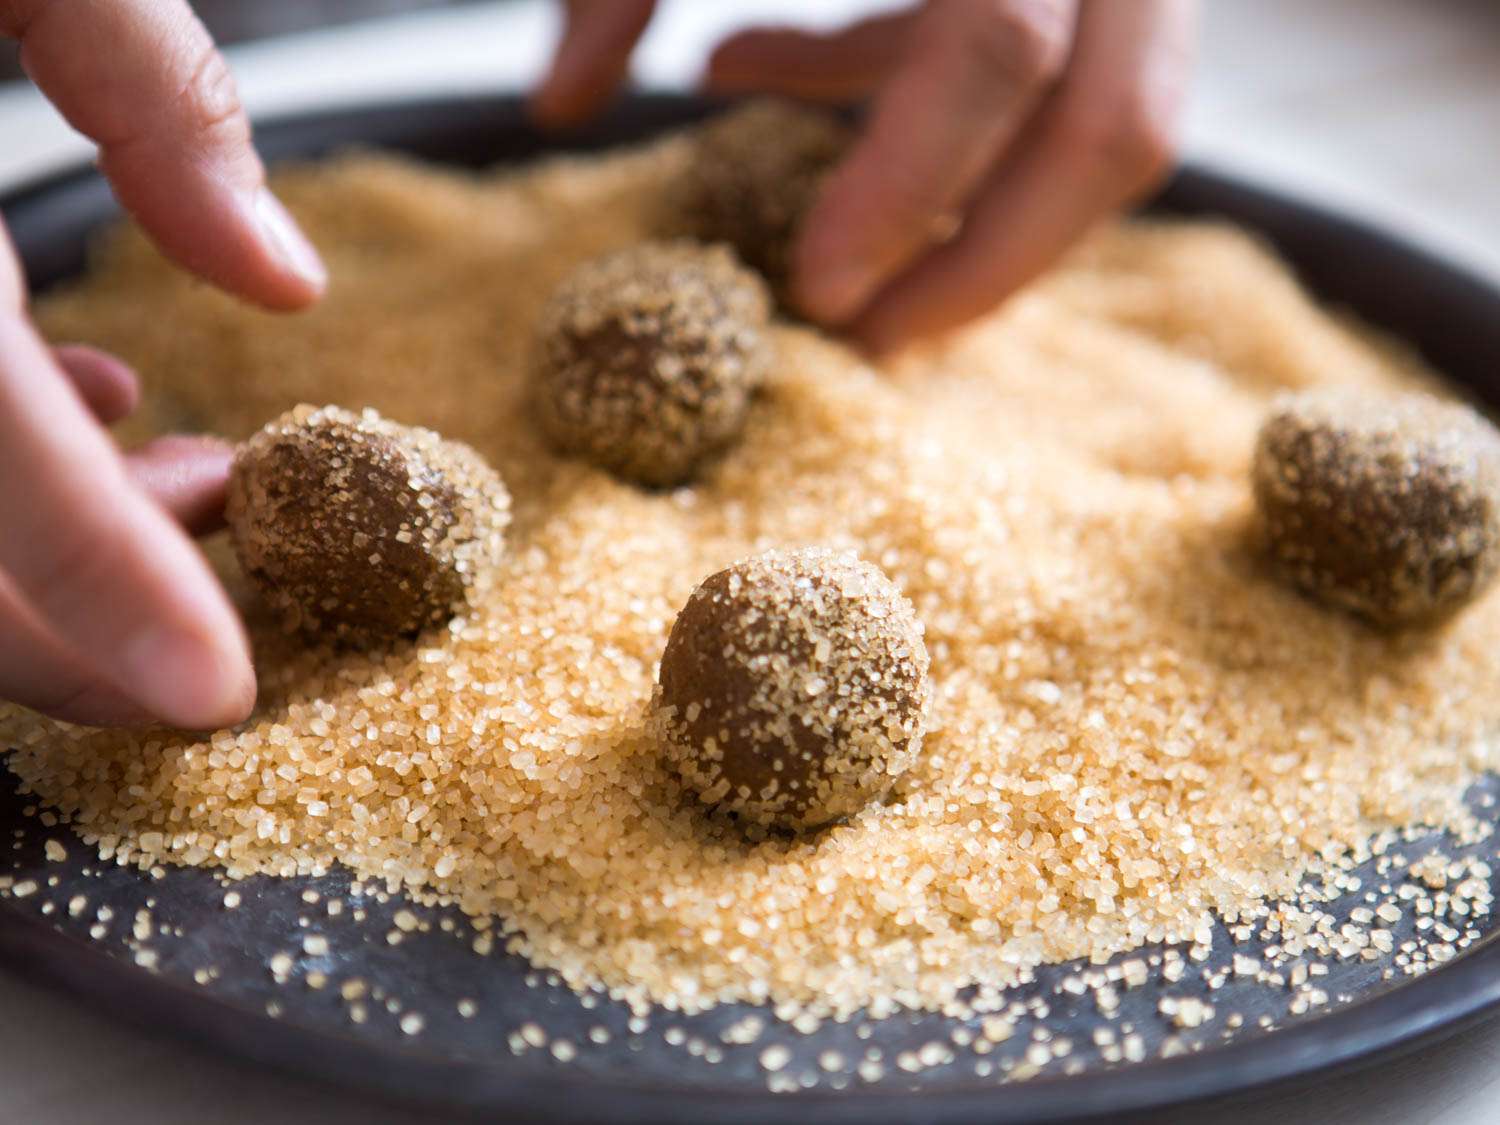 Rolling balls of gingersnap cookie dough in turbinado sugar.